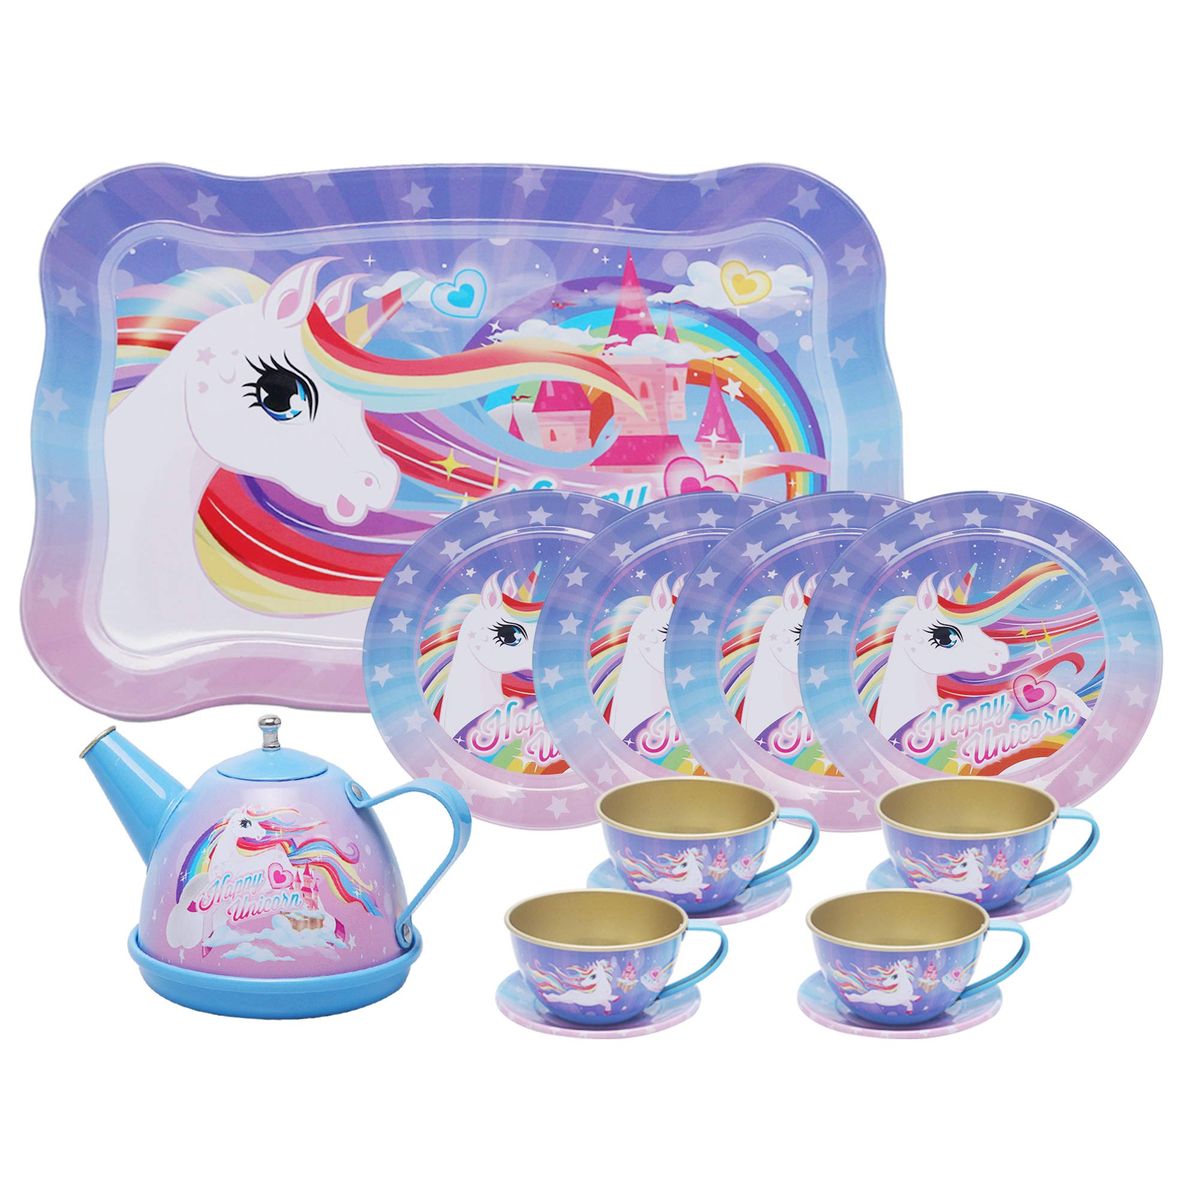 Tea Set for Kids with Case -15 Piece -Unicorn